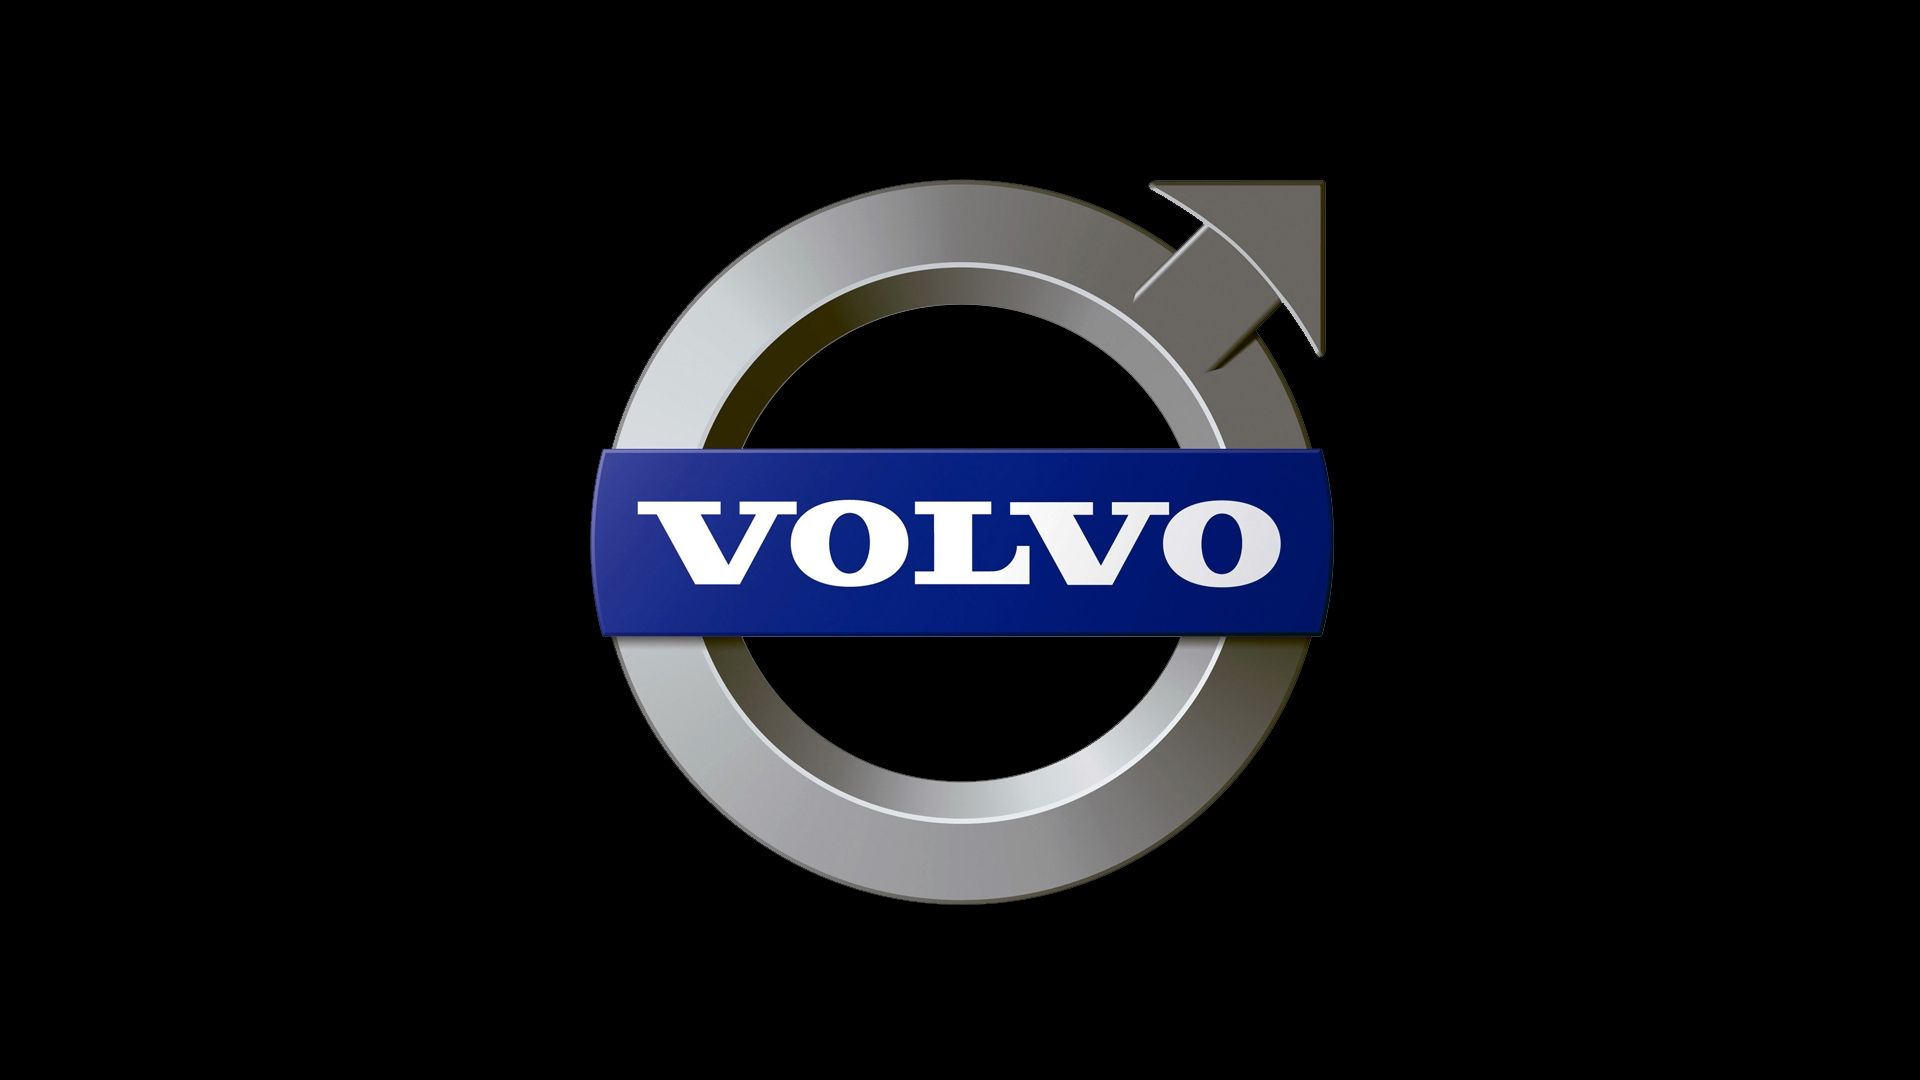 volvo logo wallpaper,text,schriftart,kreis,rad,emblem